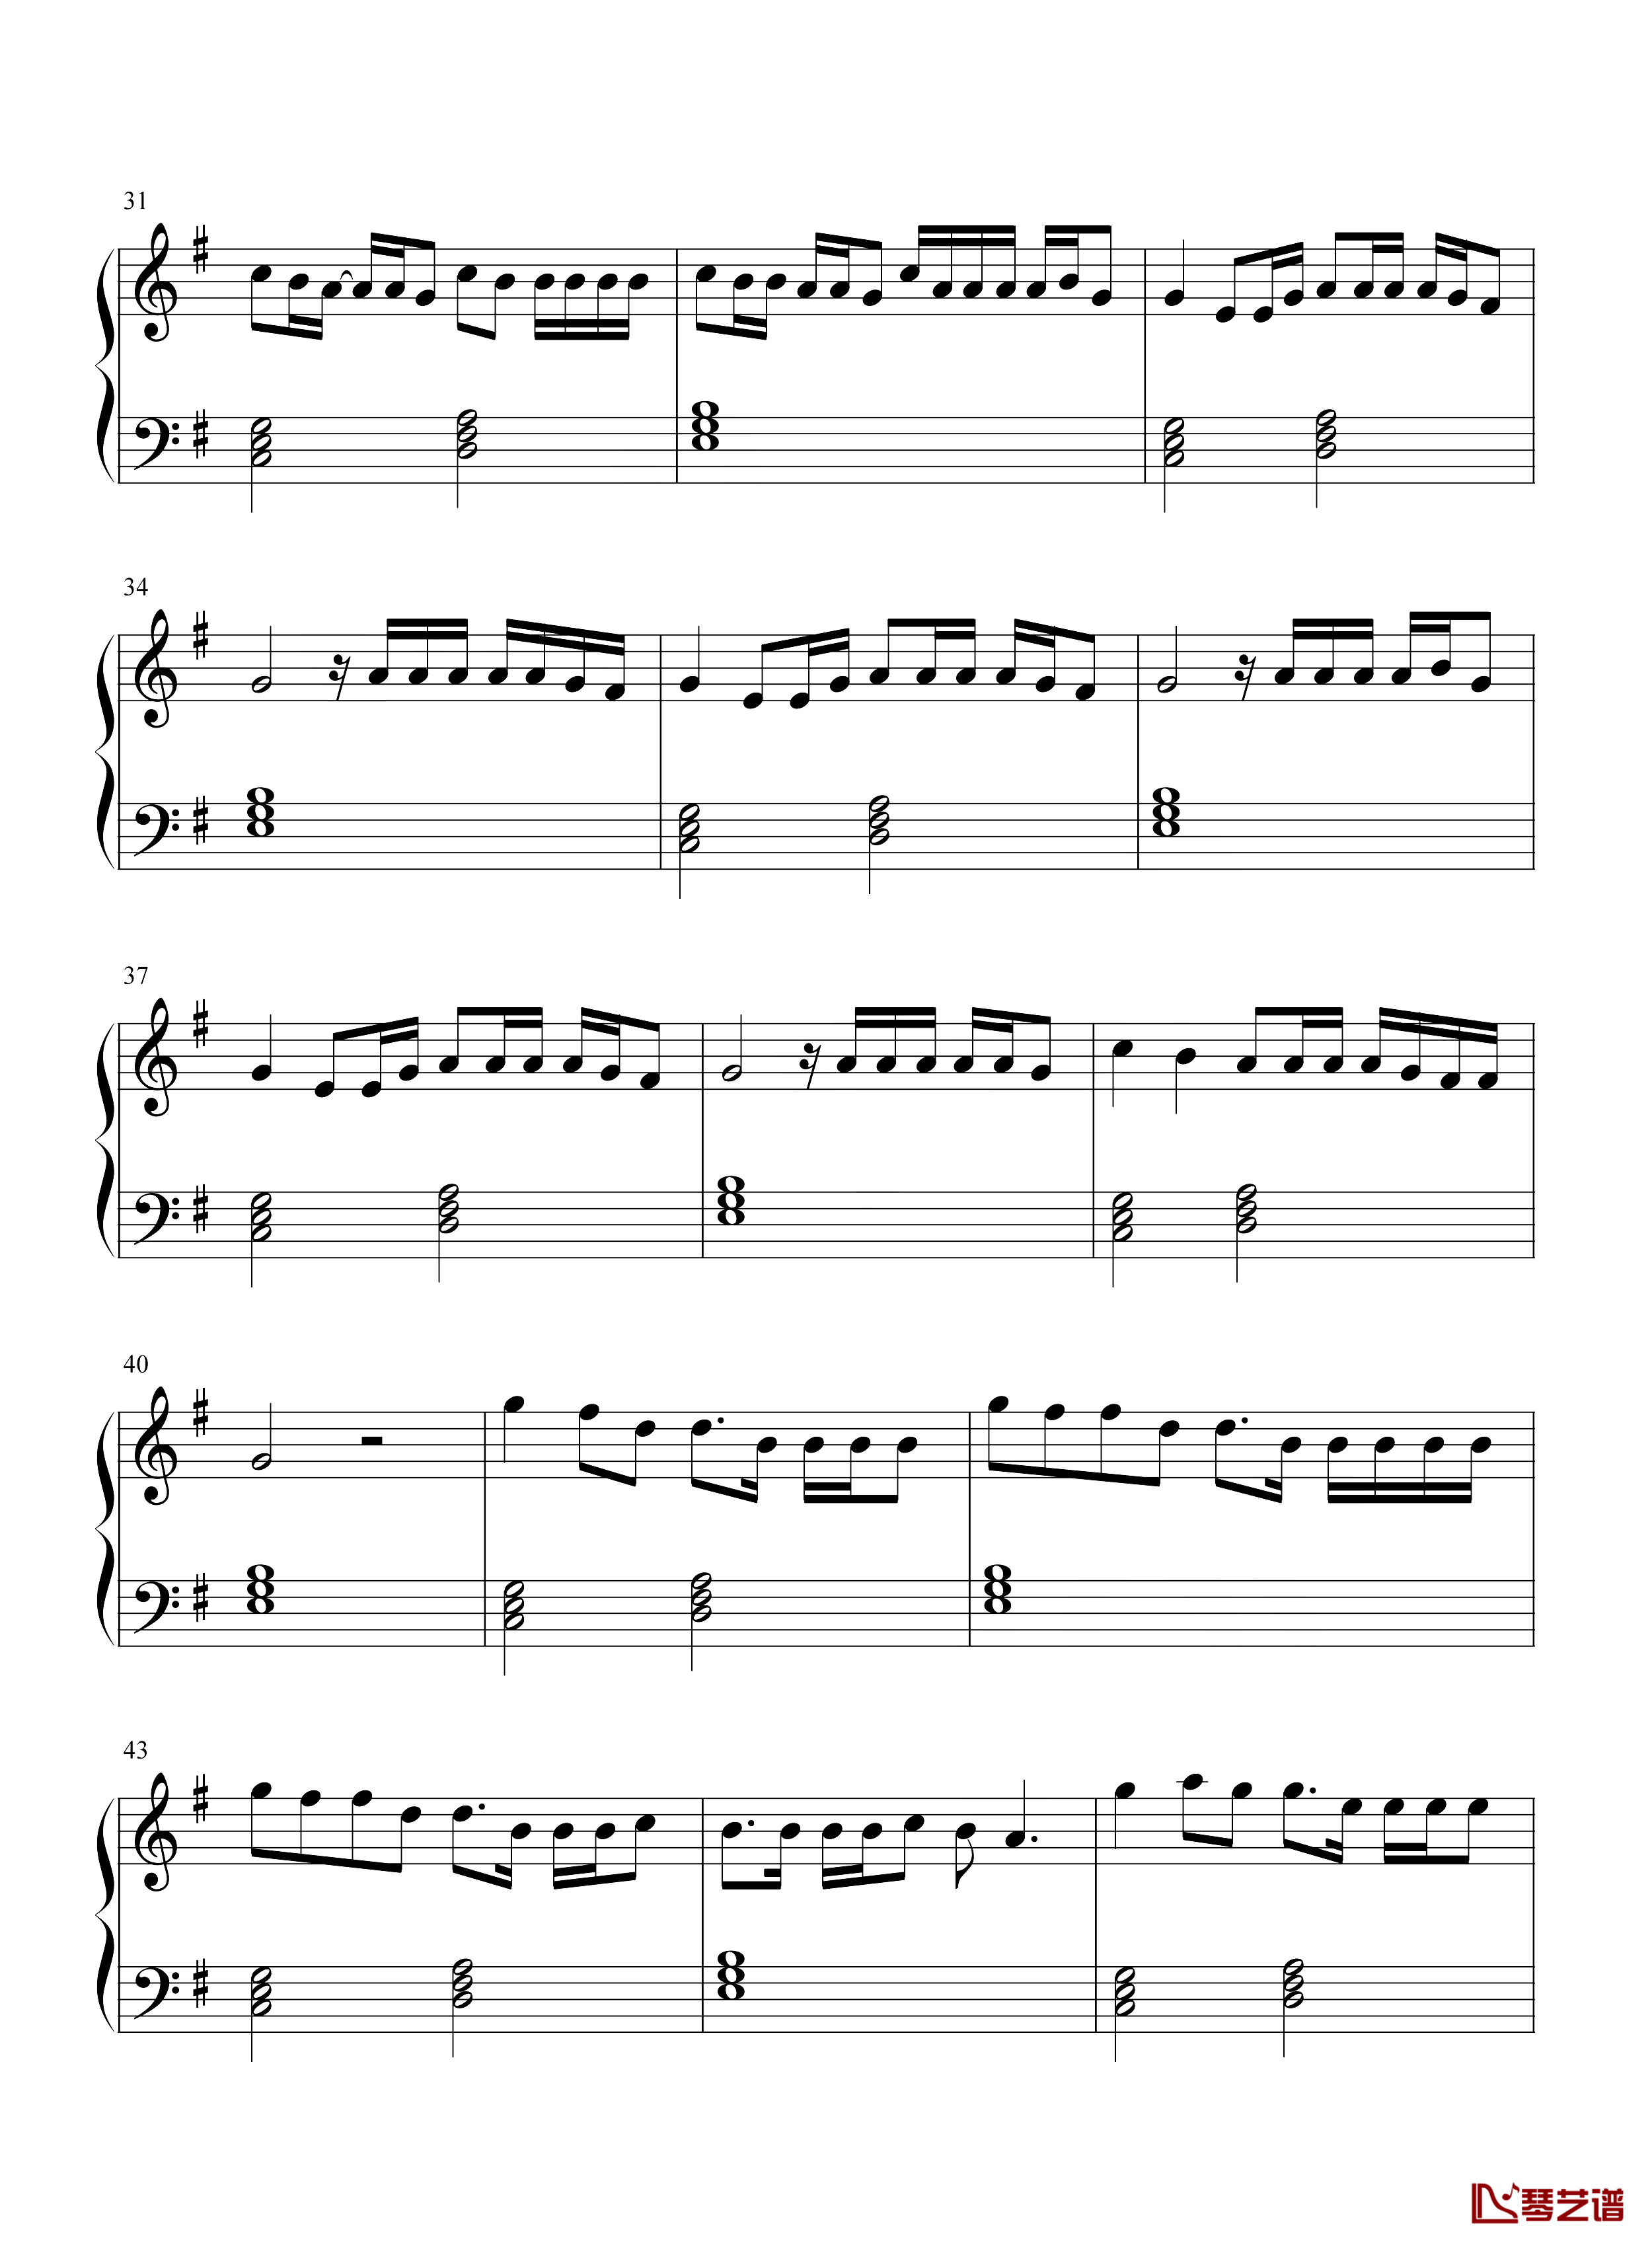 Envolver钢琴谱-Anitta-YouTube全球音乐榜前10名之一歌曲3